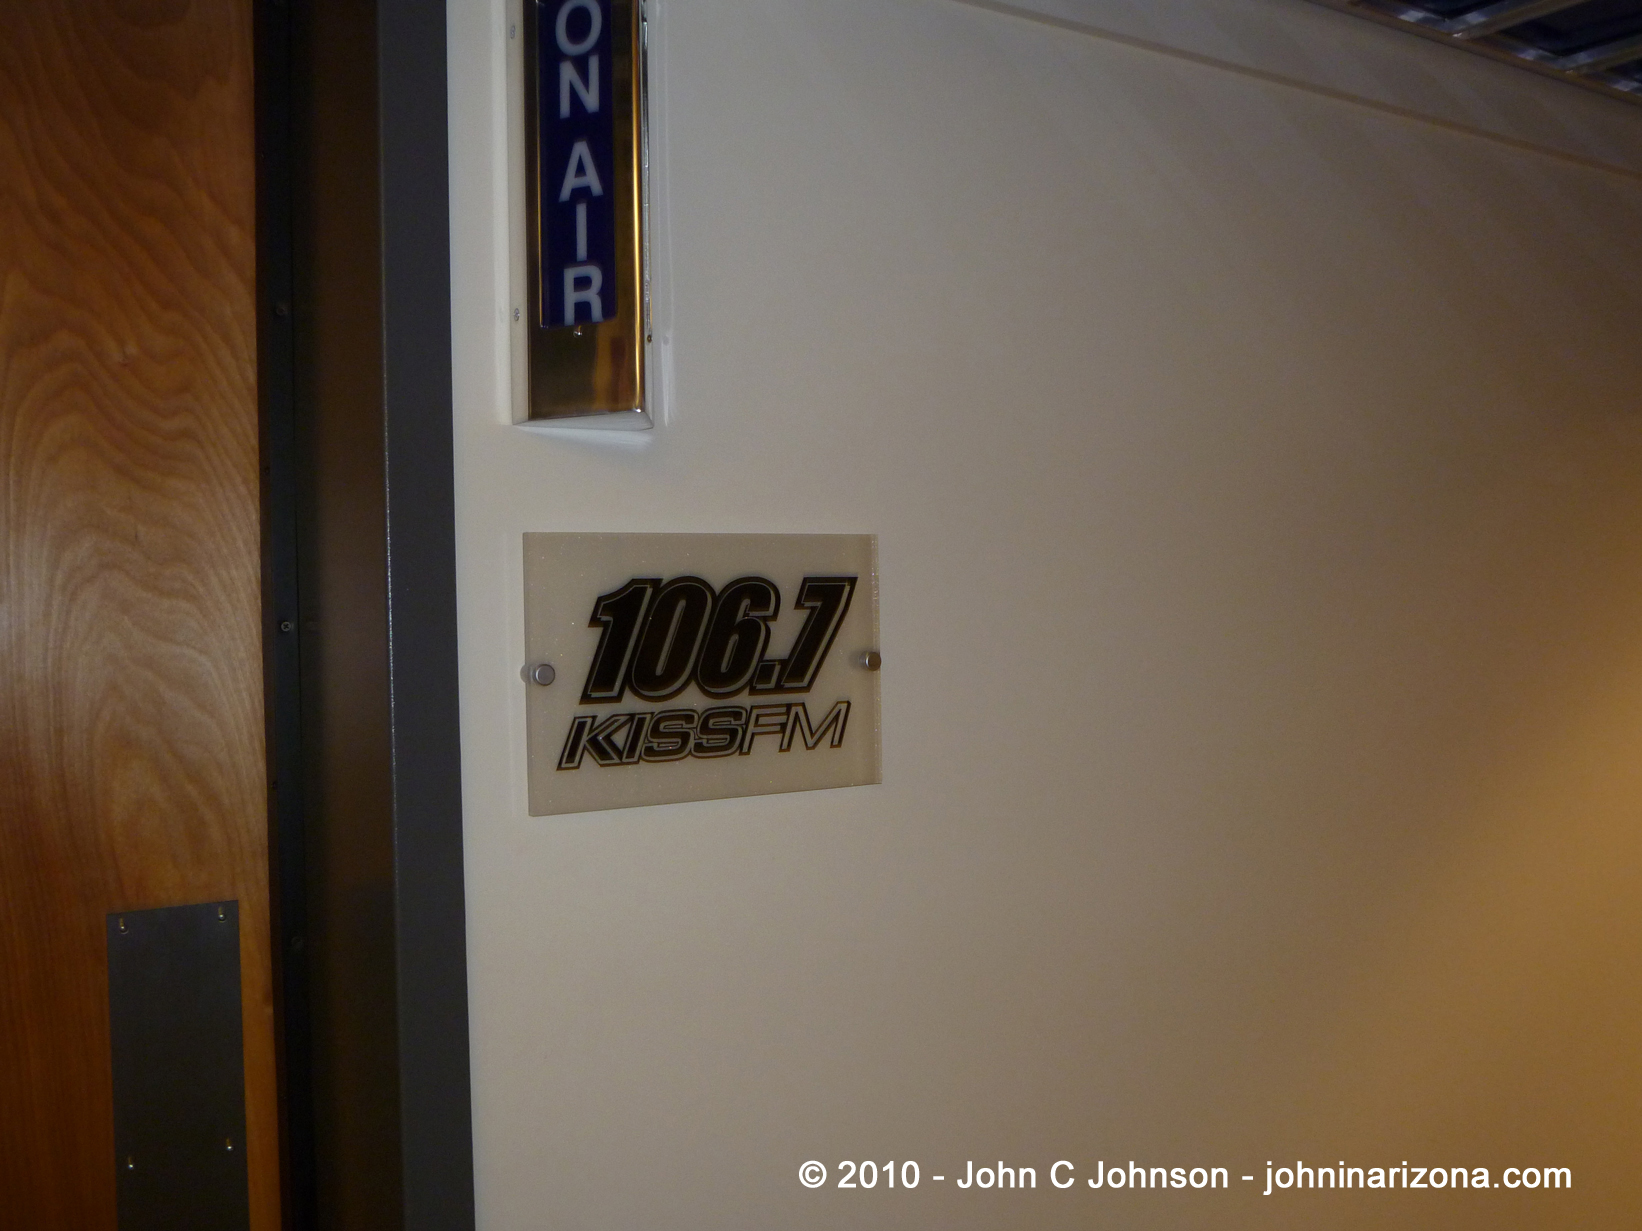 WKGS FM Radio Rochester, New York